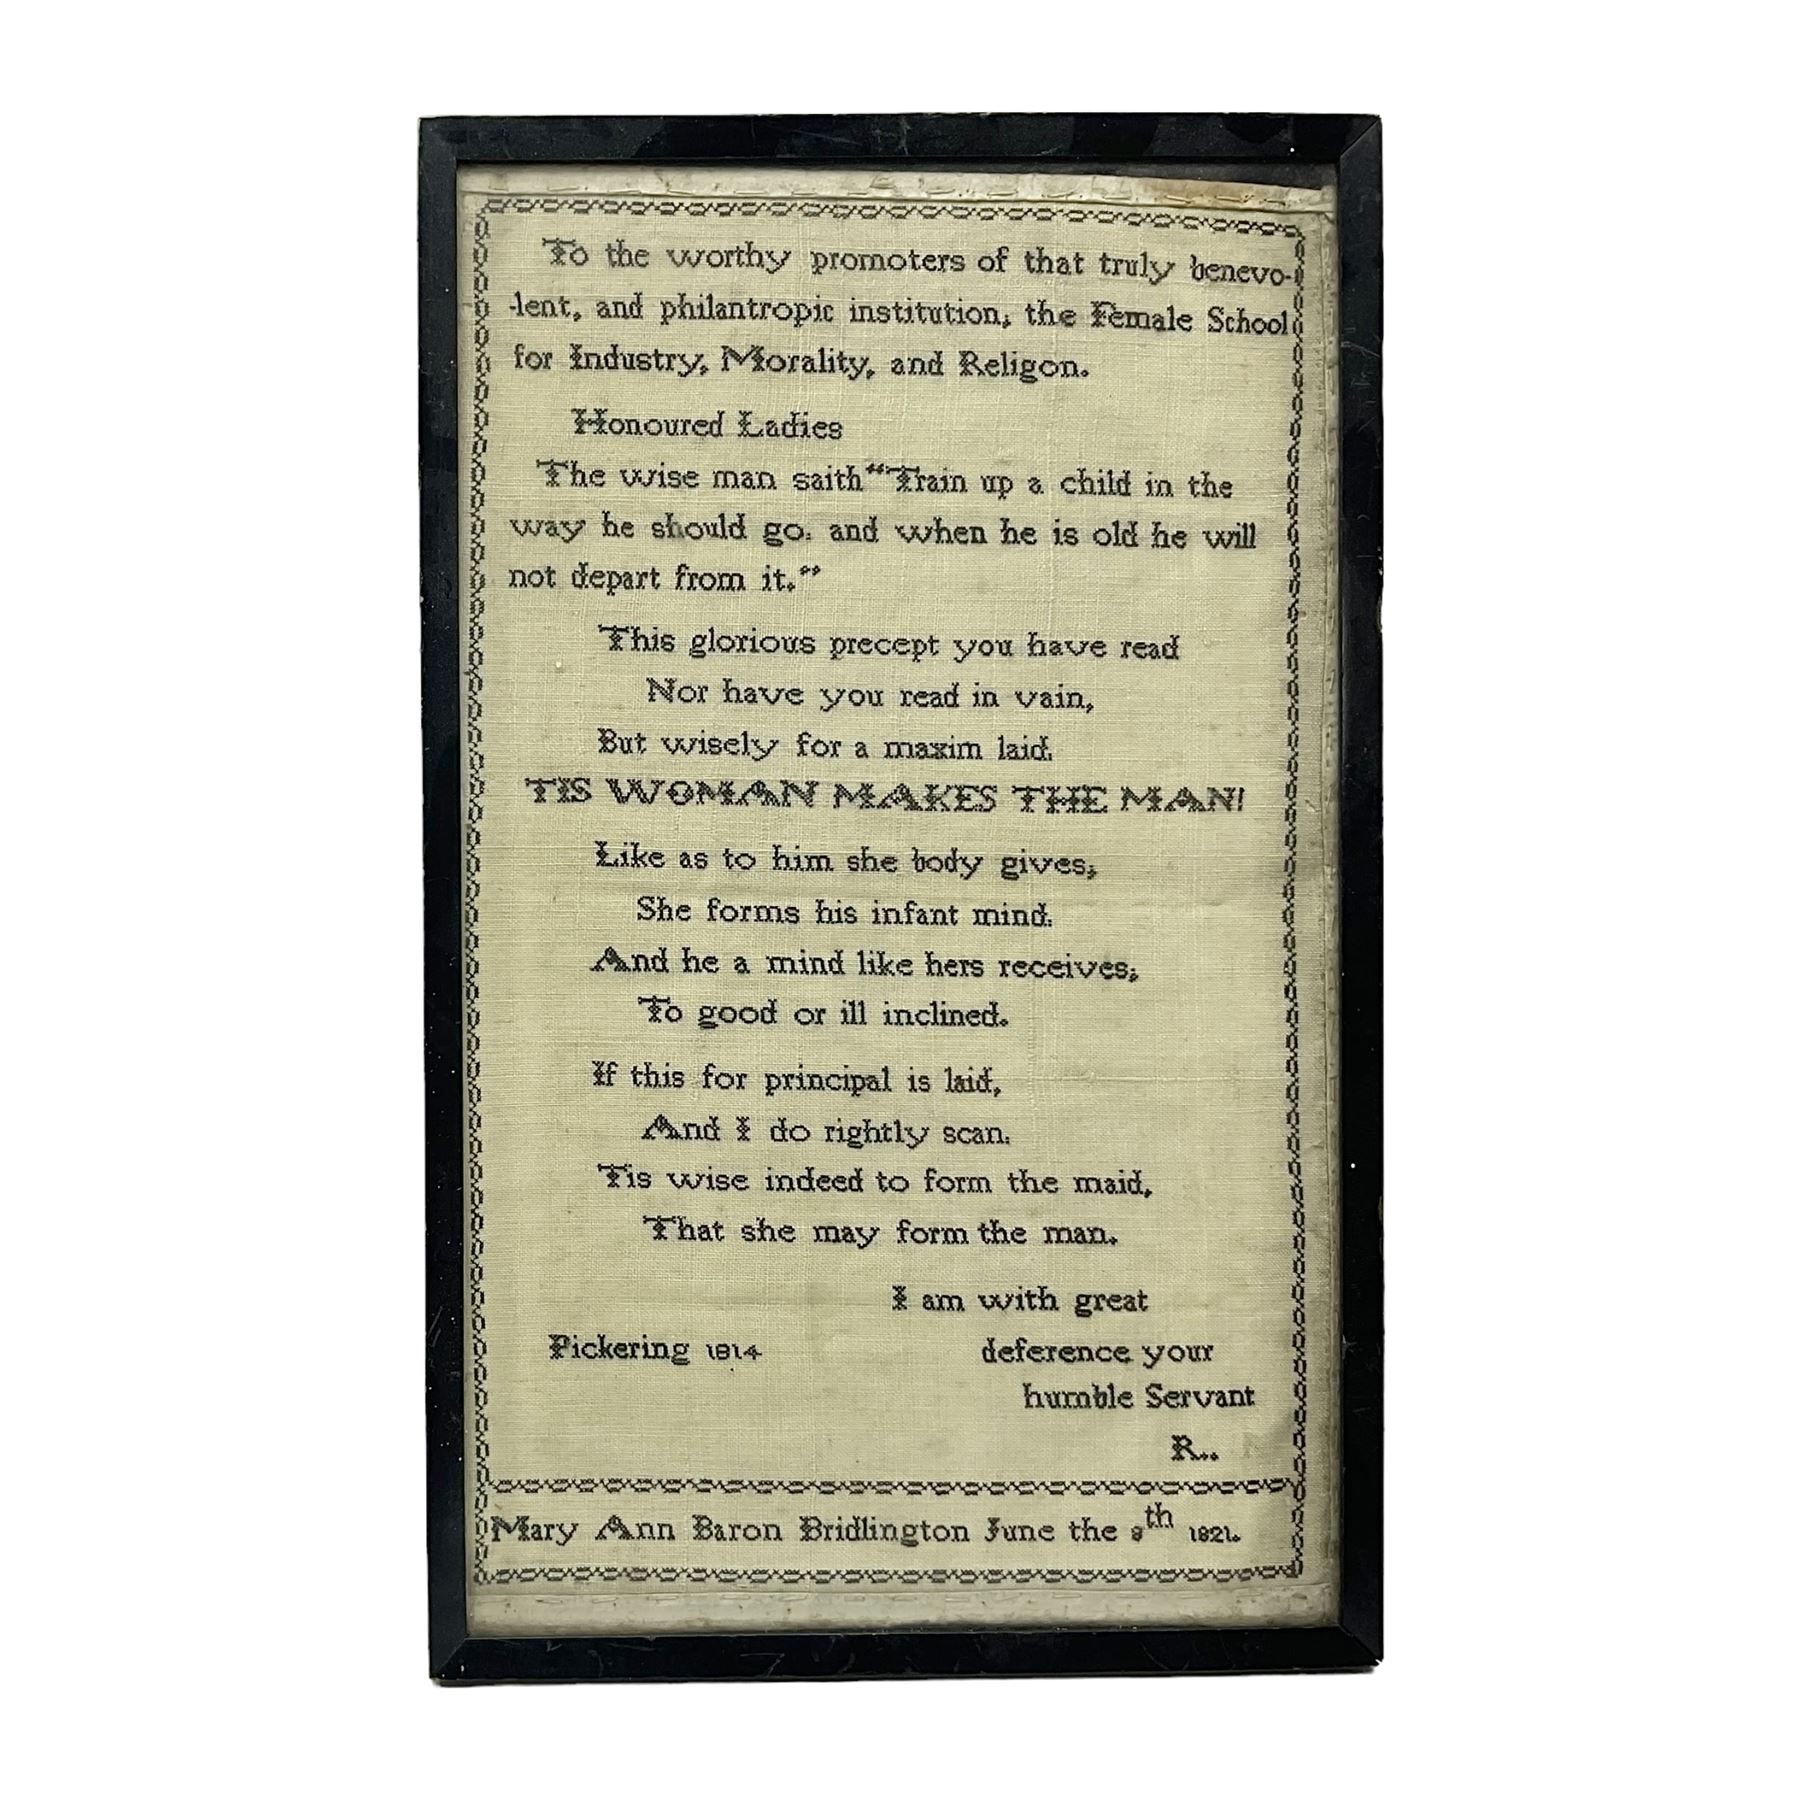 19th century text sampler